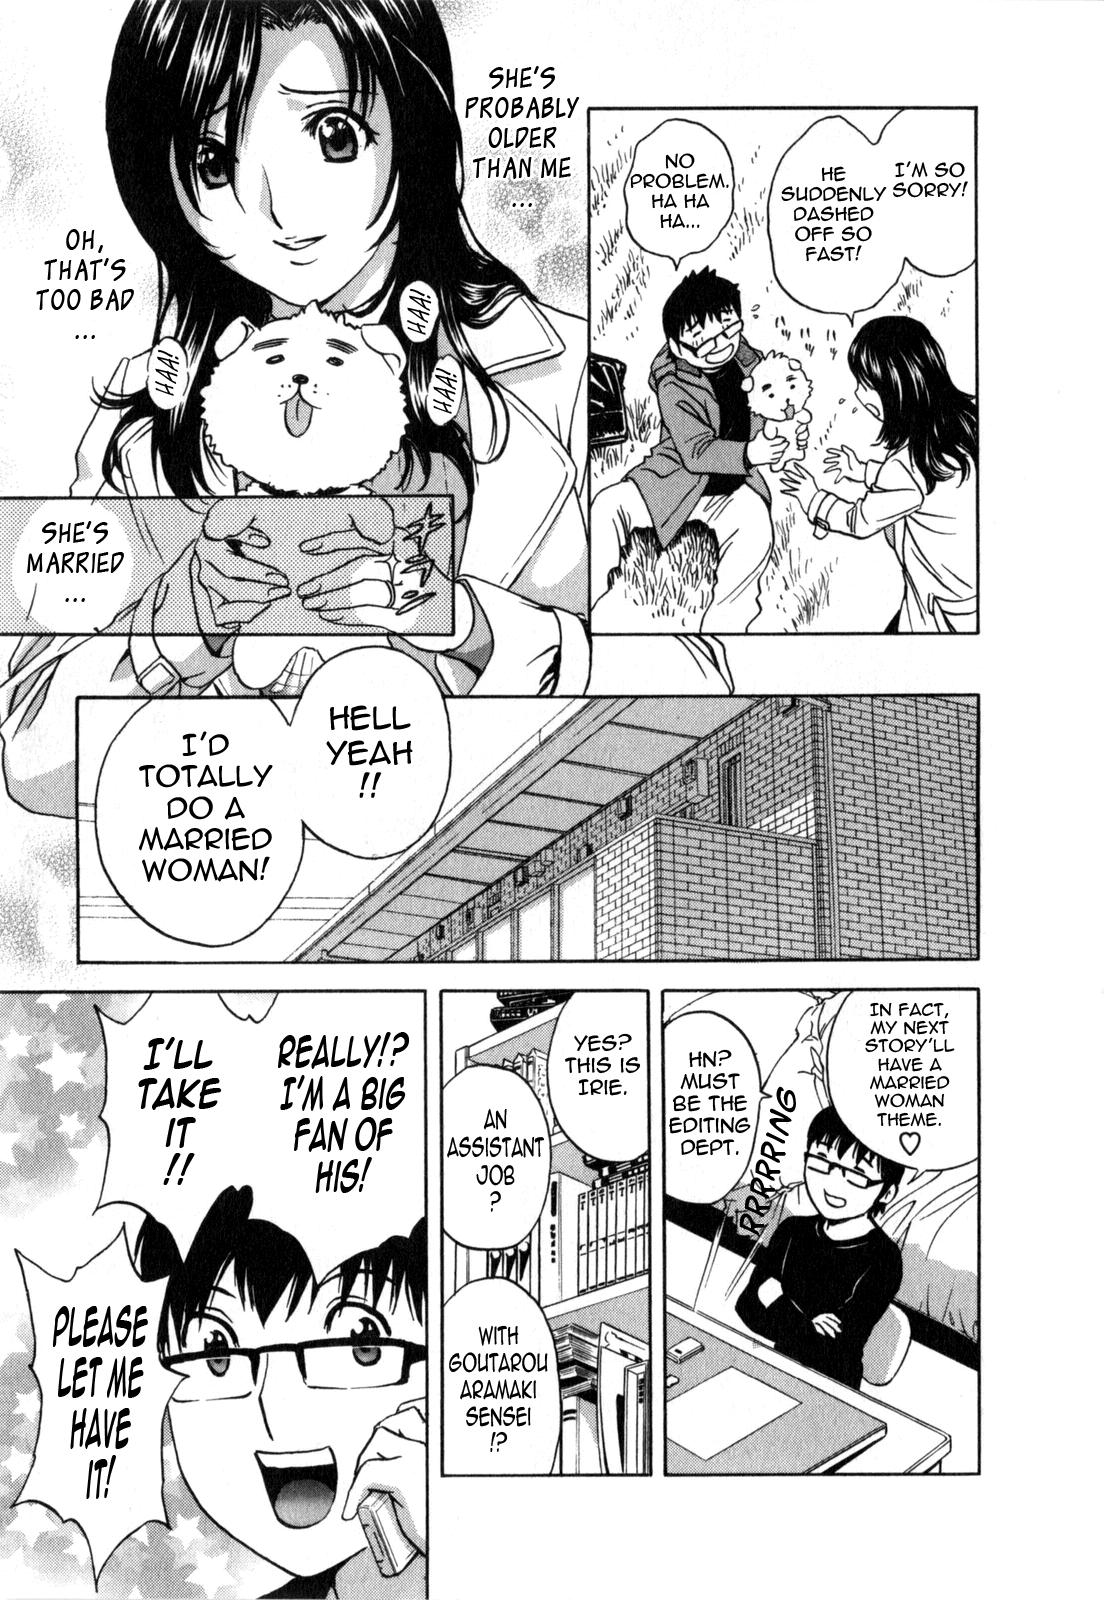 Life with Married Women Just Like a Manga 1 - Ch. 1 11